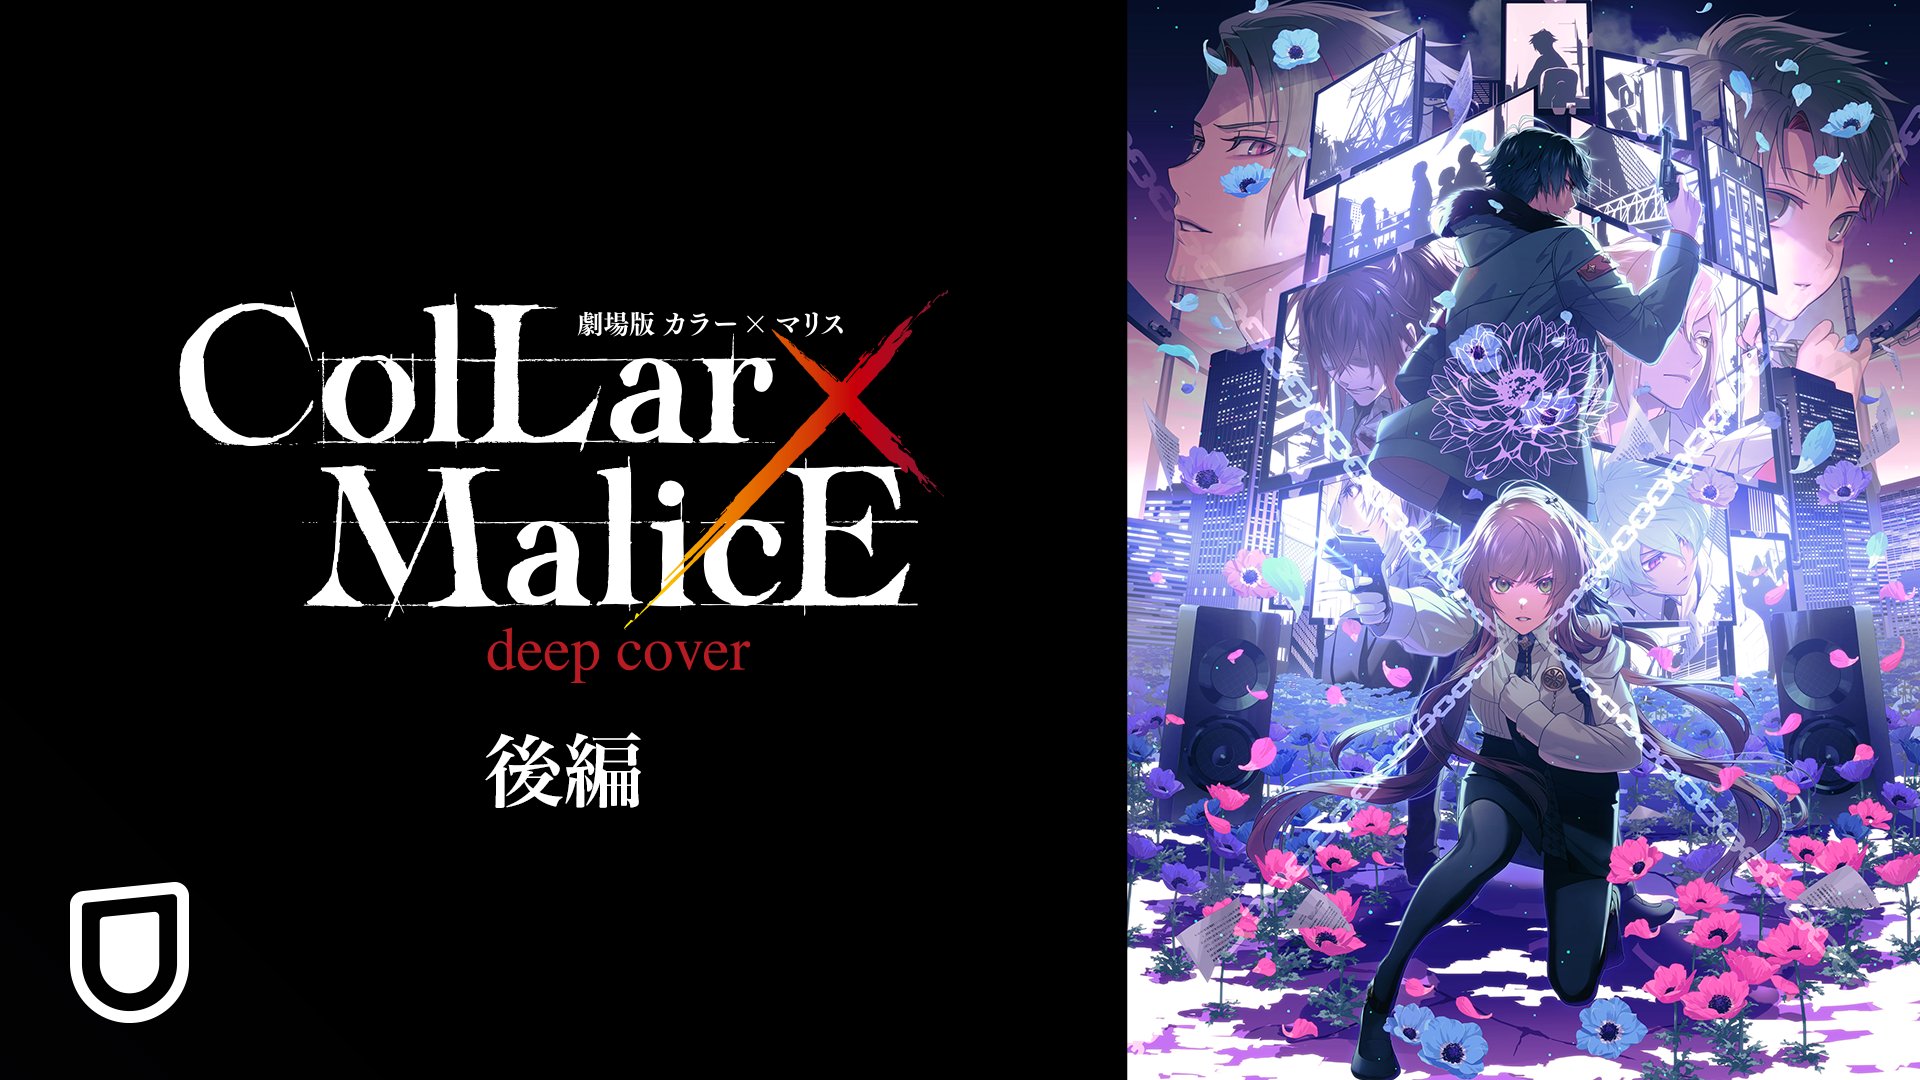 劇場版 Collar×Malice -deep cover-』公式 (@C_M_movie) / X